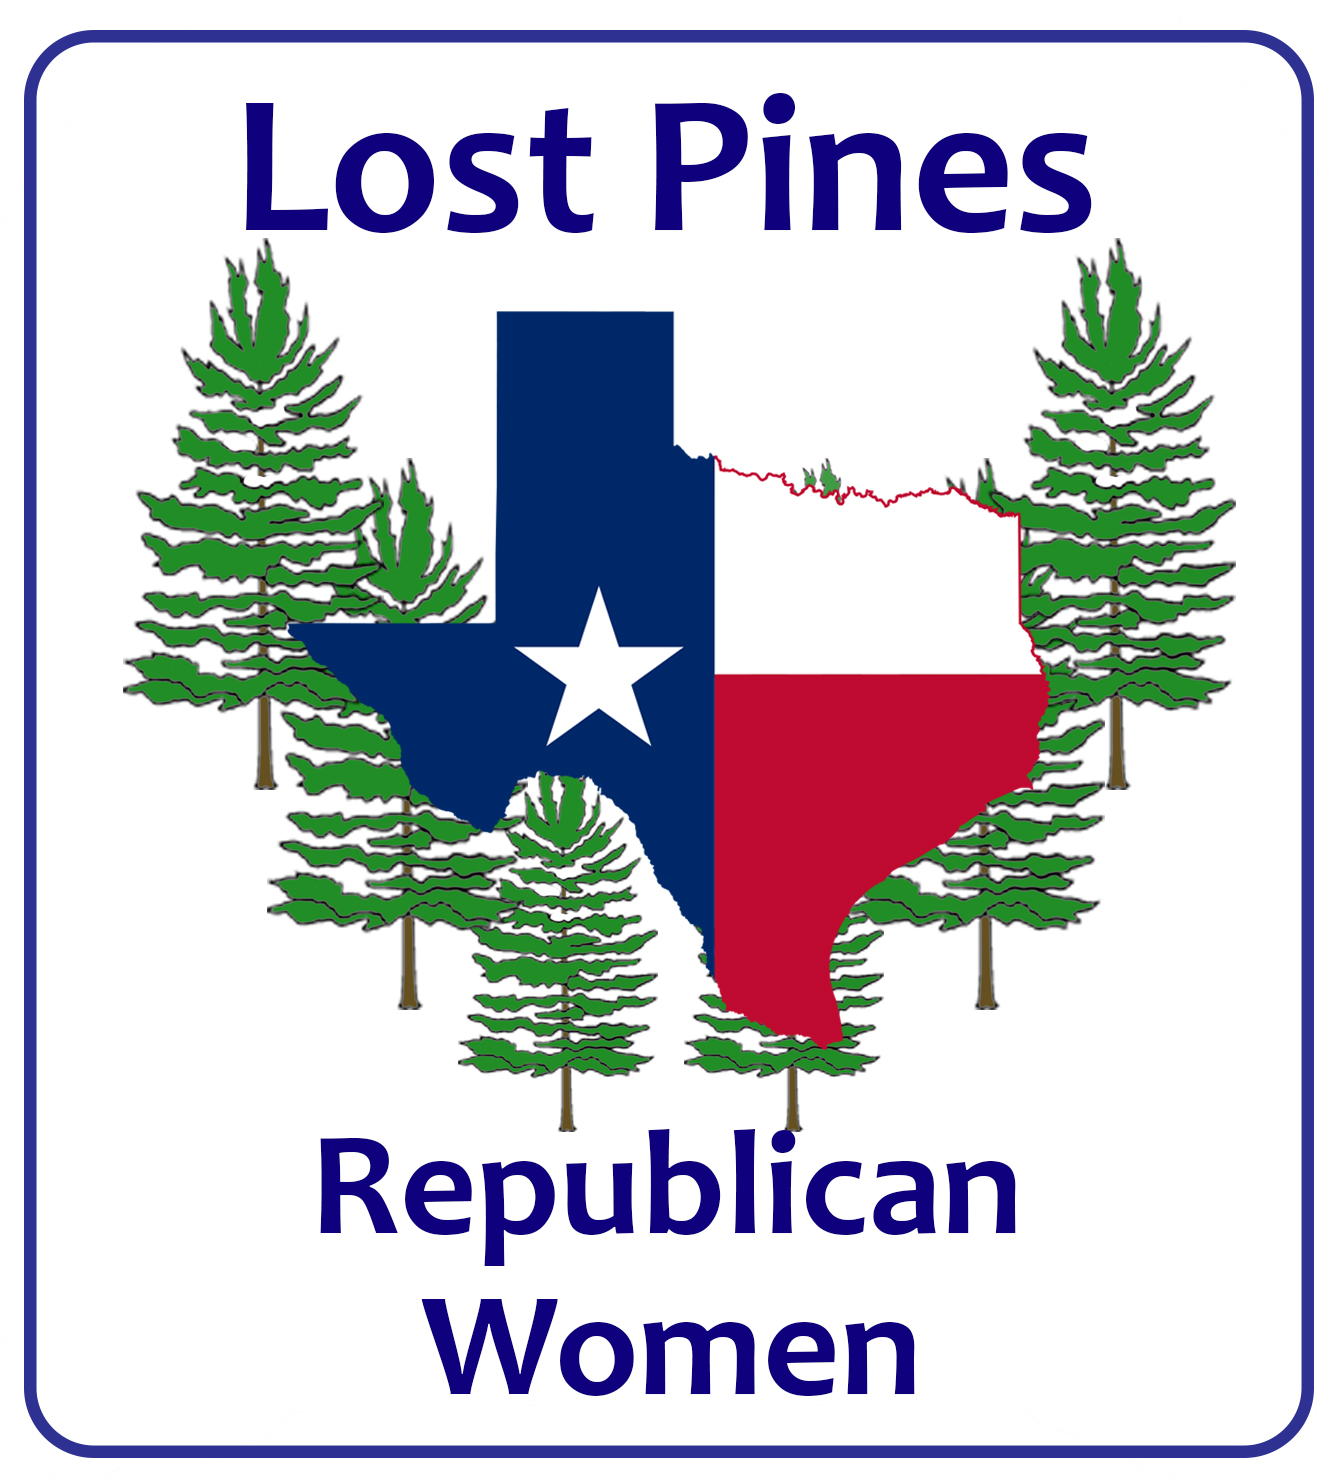 Lost Pines Republican Women rectangular logo